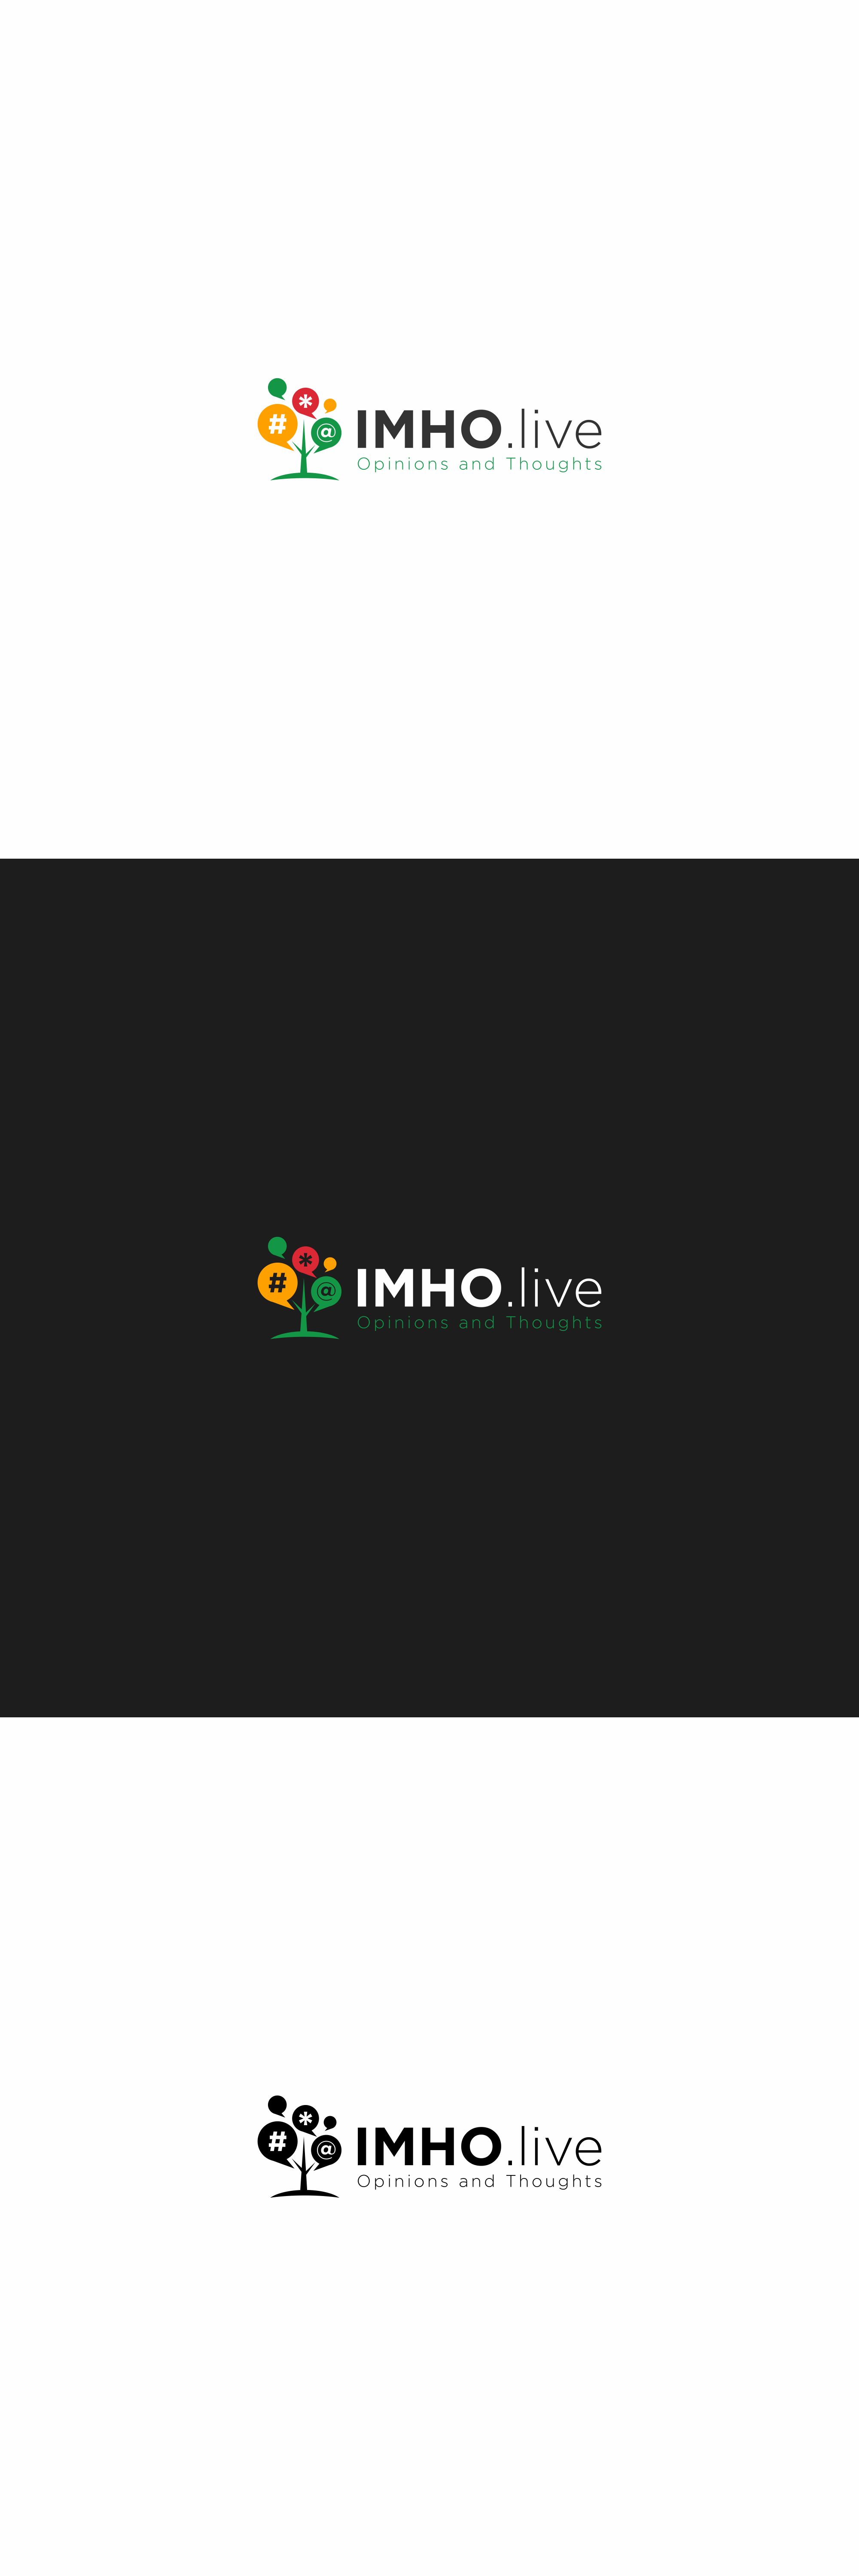 Логотип для IMHO.live — Opinions and Thoughts - дизайнер ironbrands